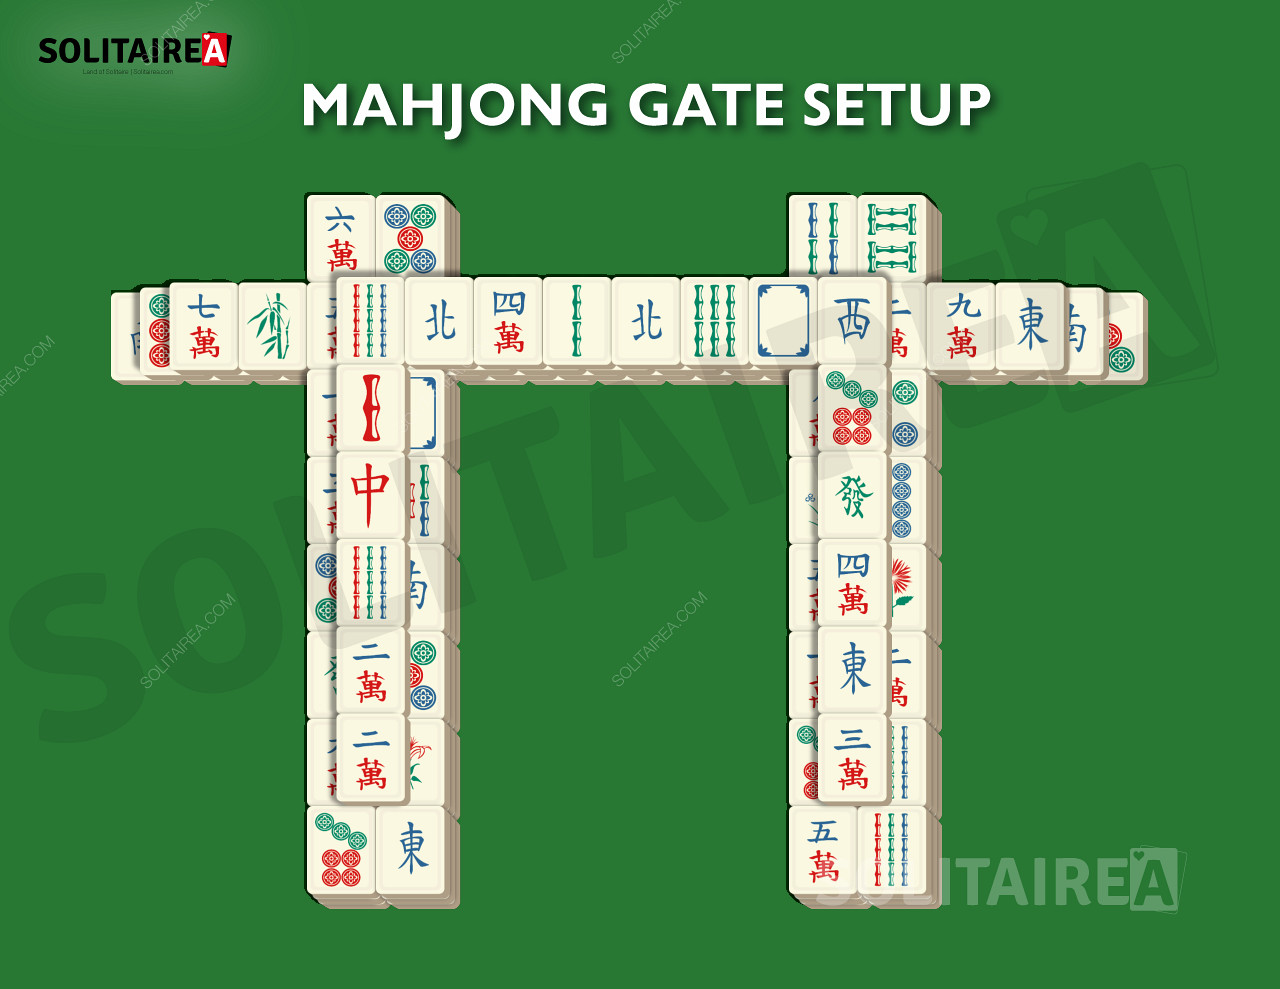 Konfiguracja i strategia Mahjong Gate